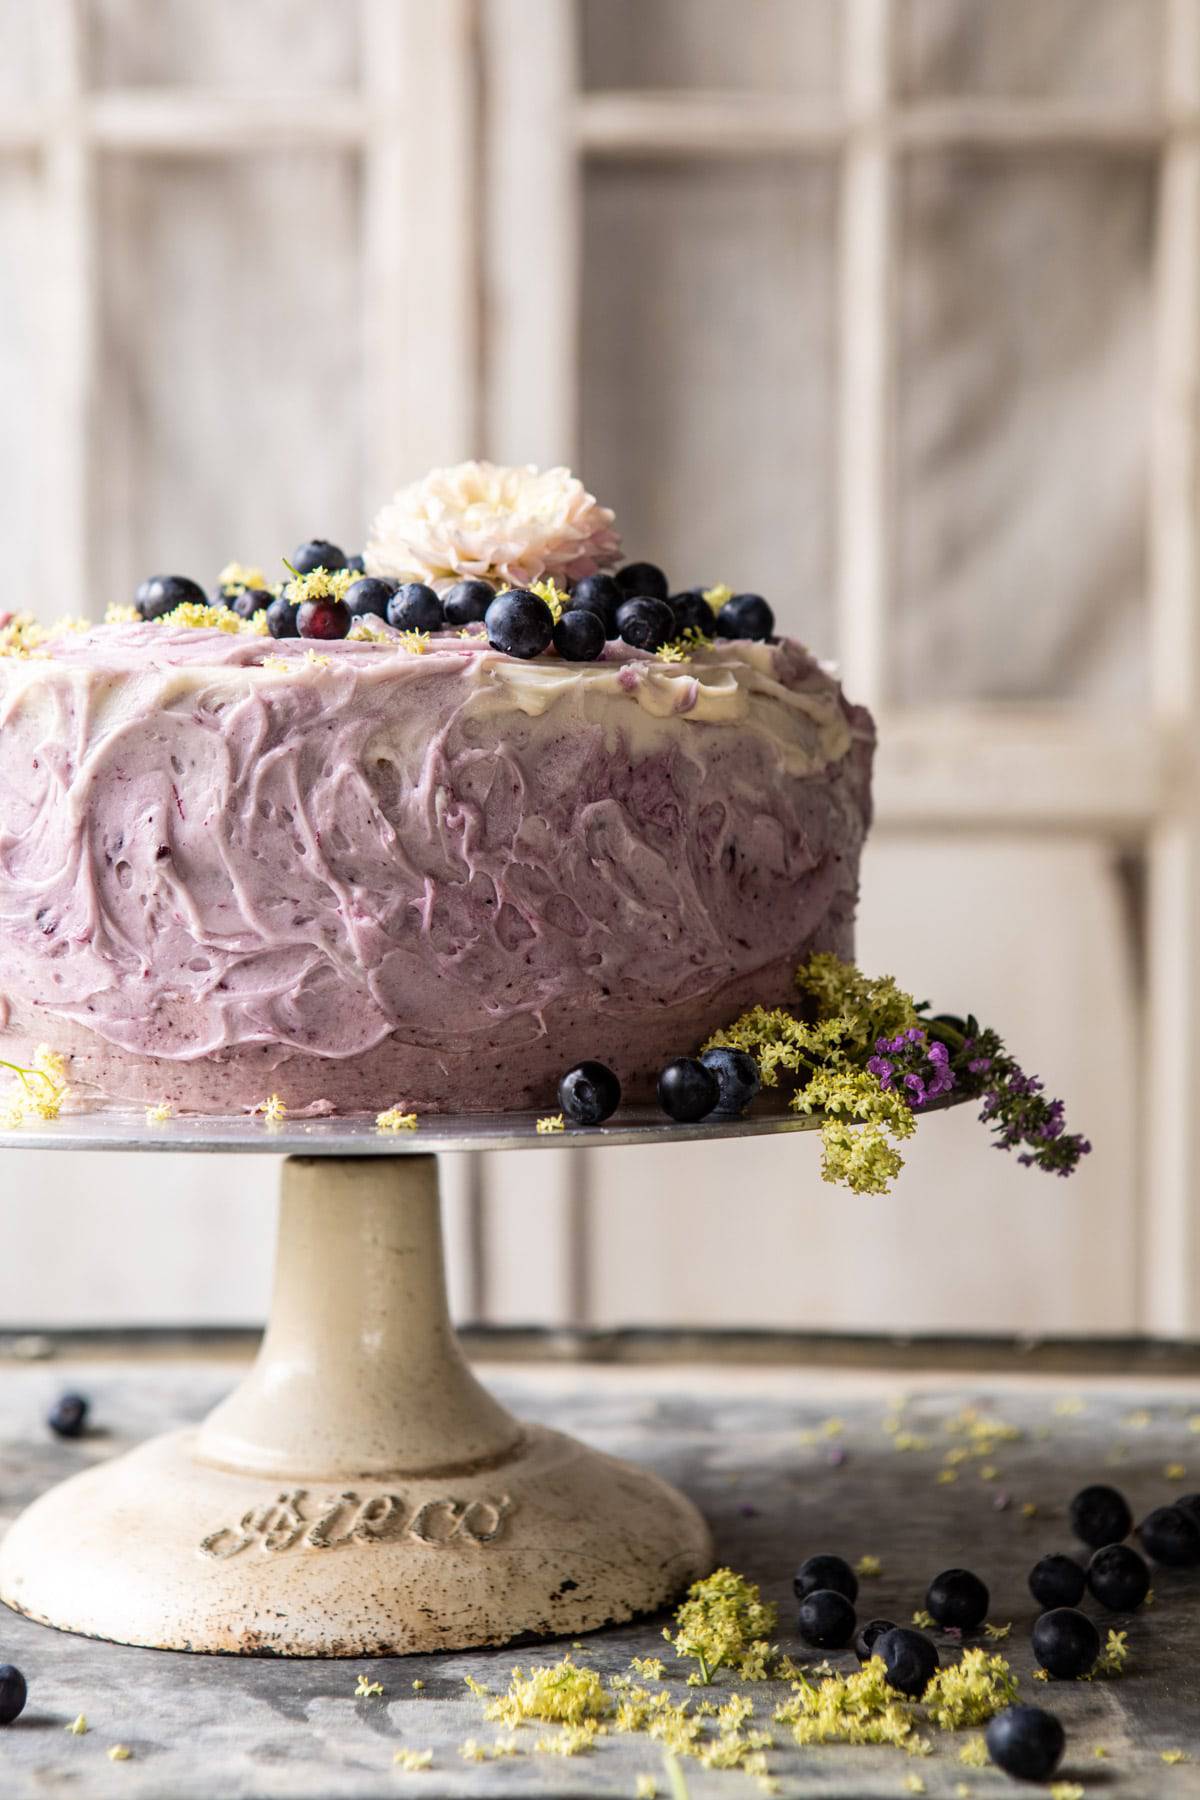 Bursting Blueberry Lemon Layer Cake | halfbakedharvest.com #bleberrycake #layercake #summerrecipes #dessert